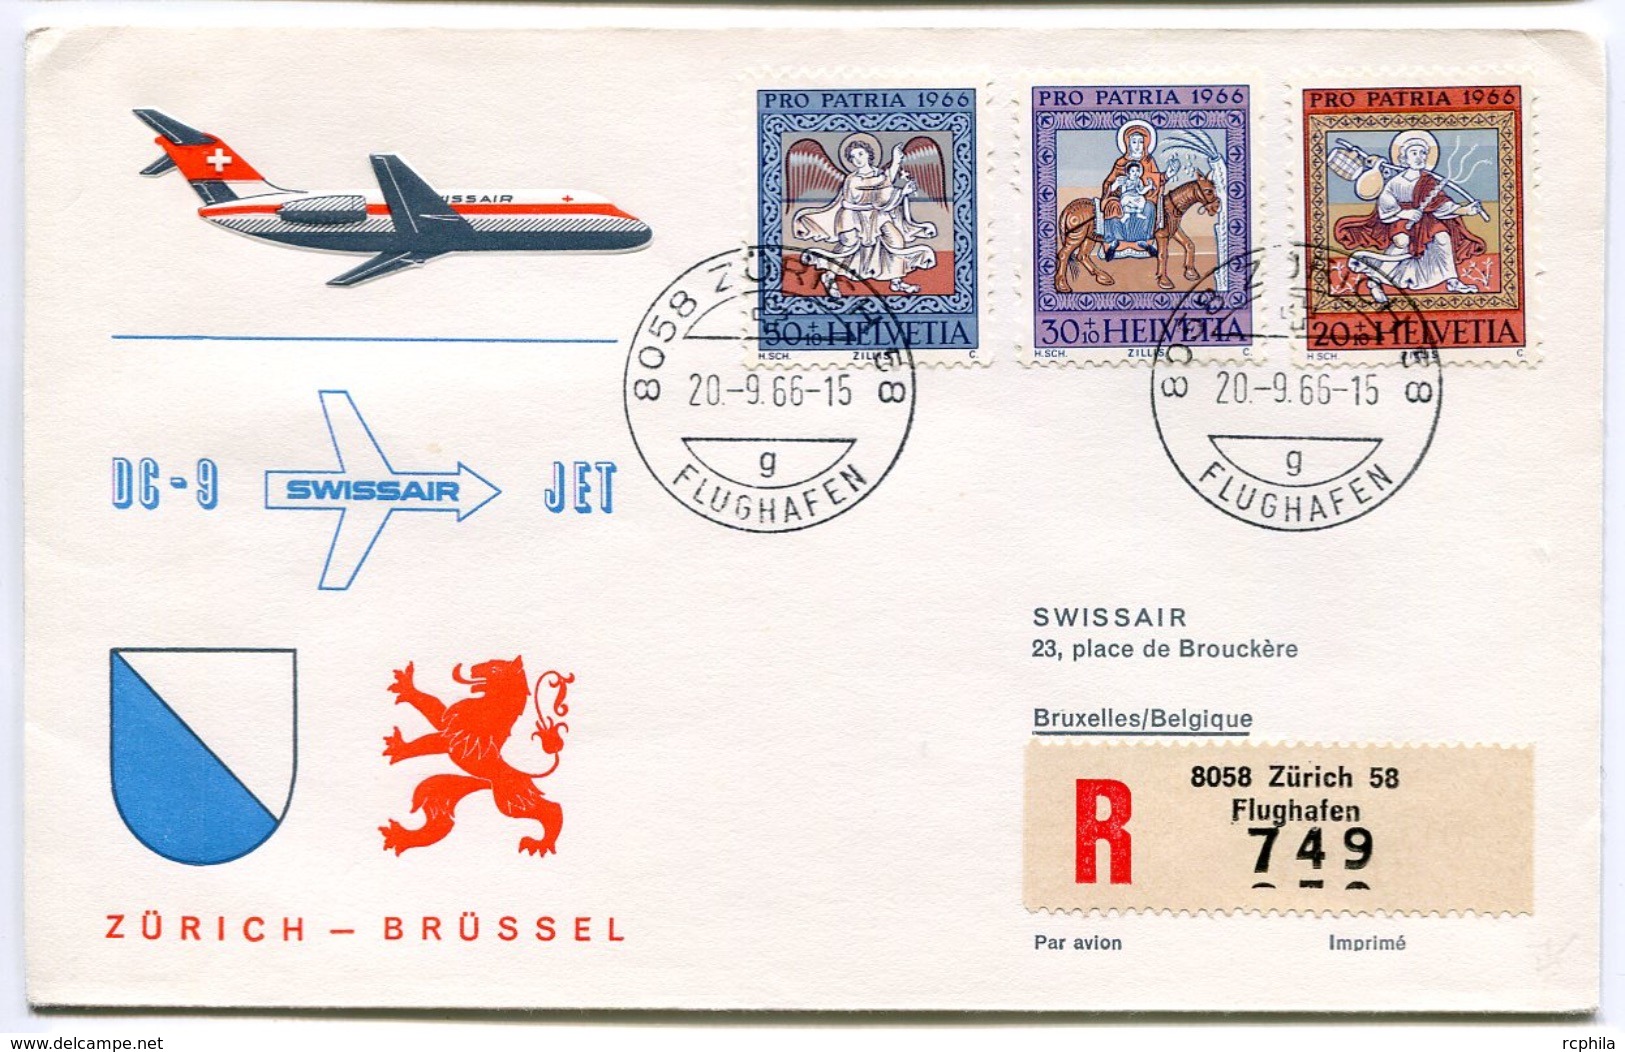 RC 6633 SUISSE 1966 1er VOL SWISSAIR ZURICH - BRUSSEL BELGIQUE DC-9 FFC LETTRE COVER - Primi Voli